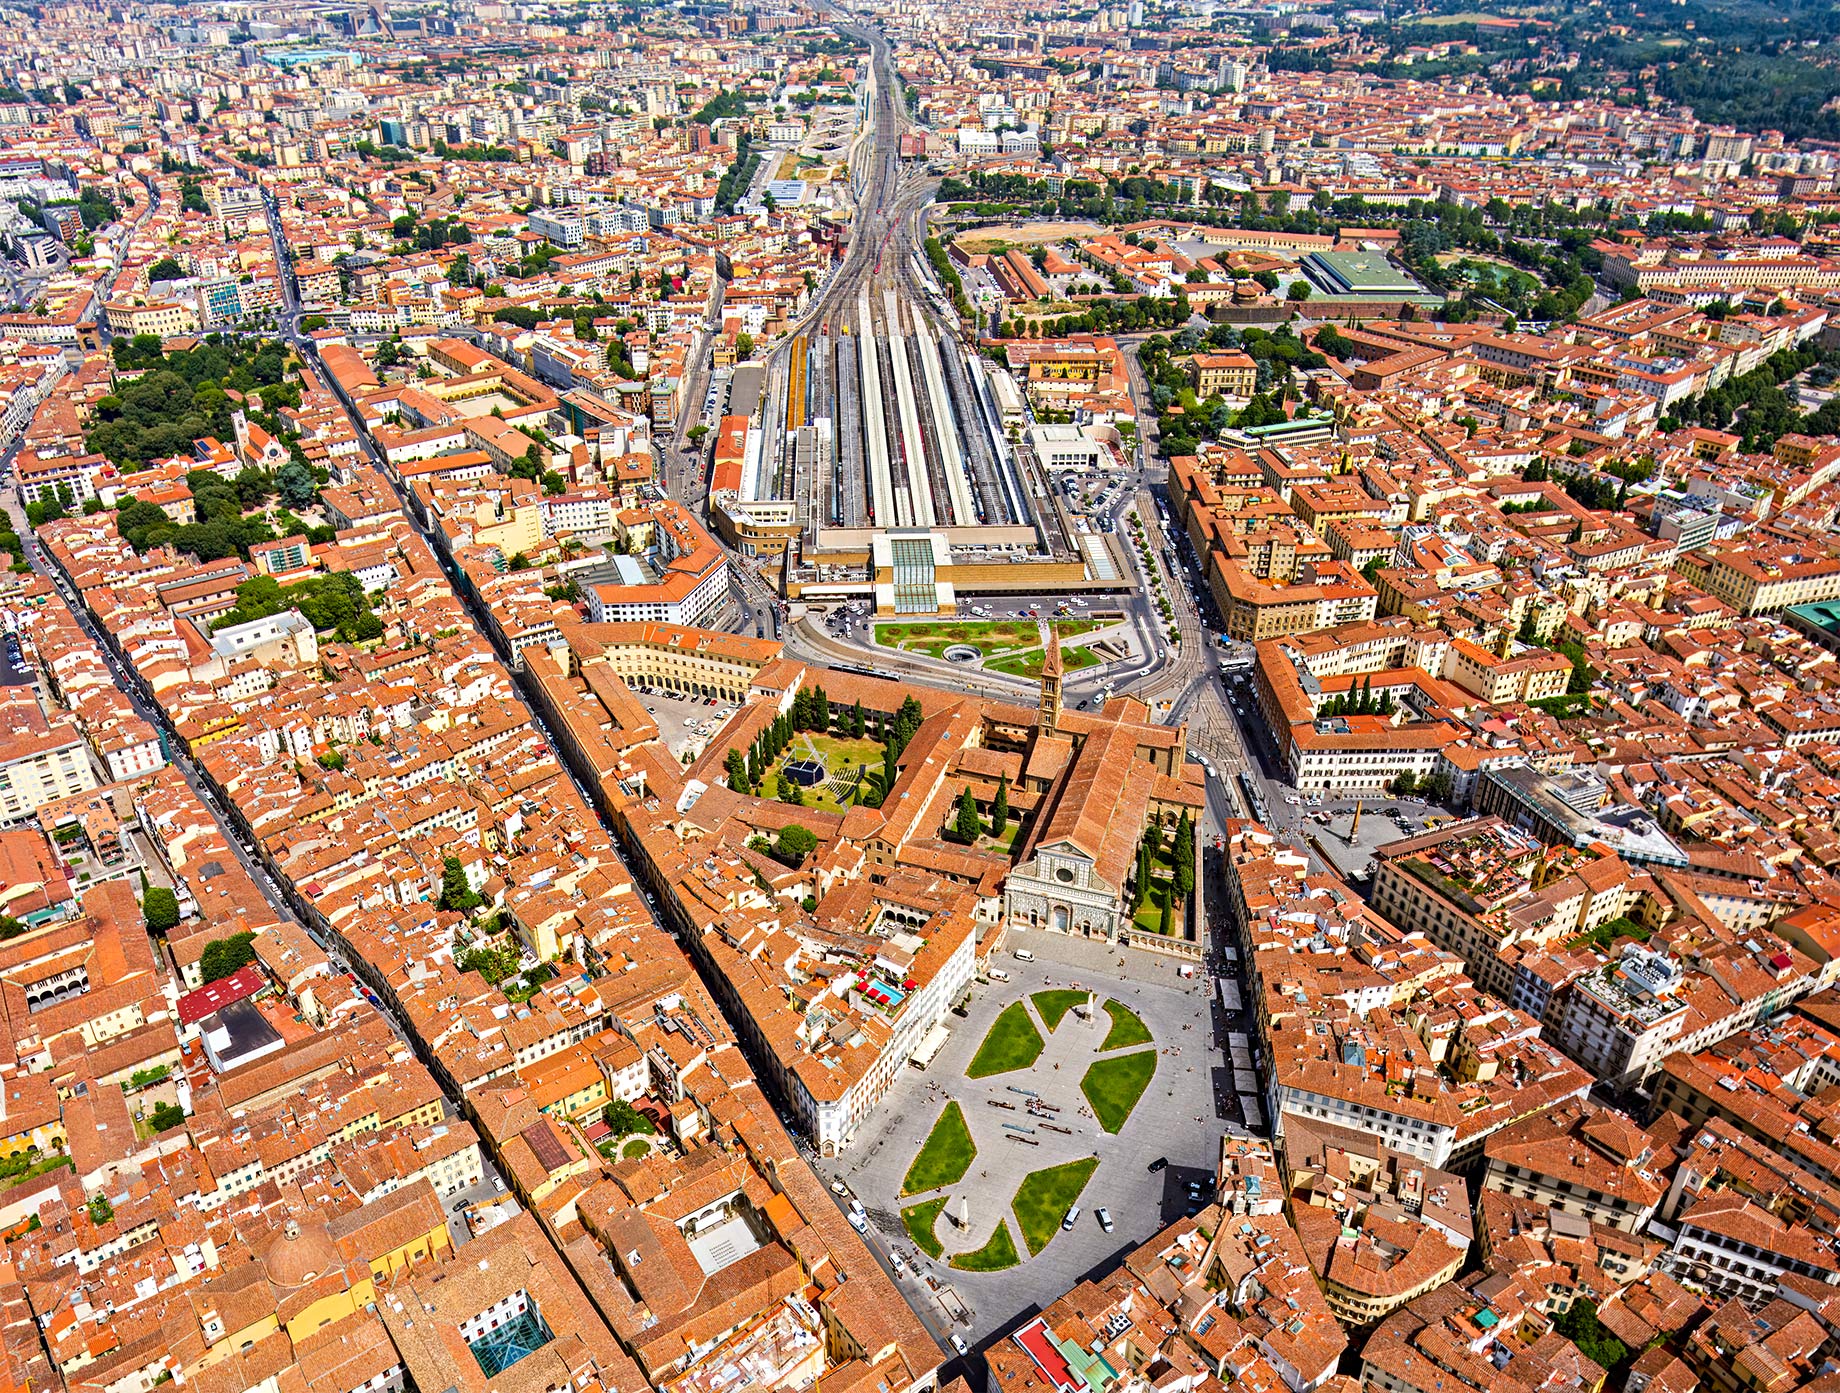 Firenze Santa Maria Novella - Train Station - Florence, Italy